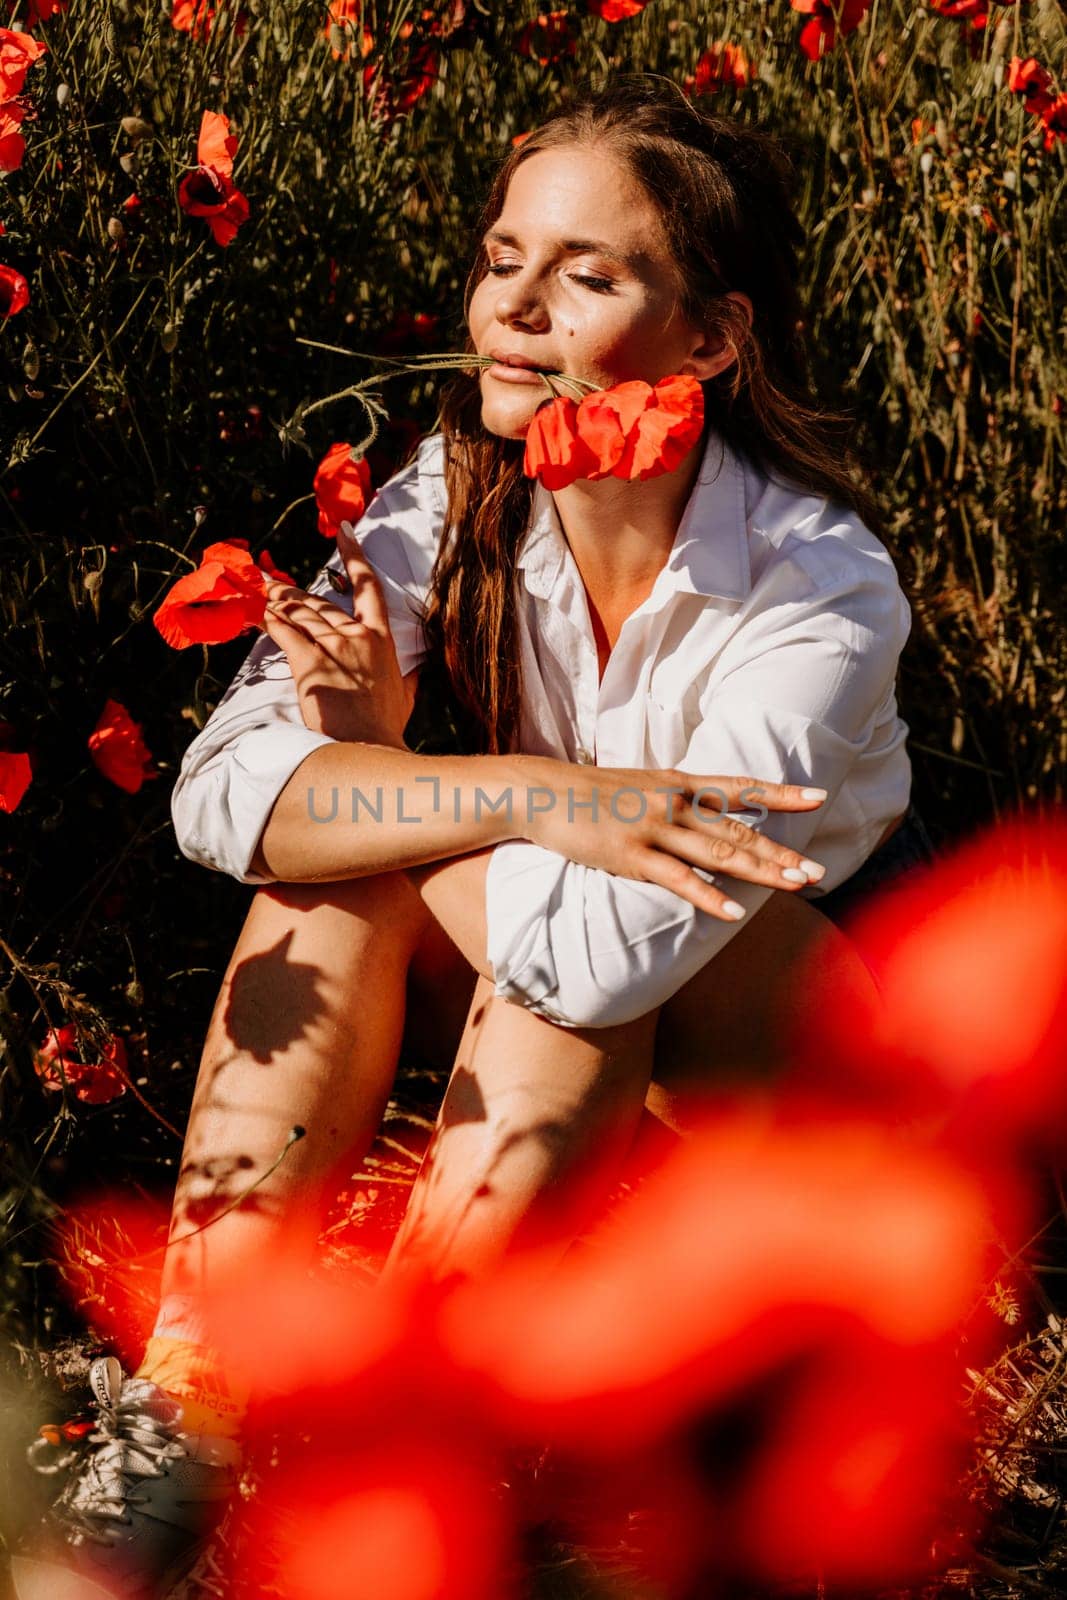 Woman poppies field. Happy woman is resting in the rays of the sun sitting in the poppy field